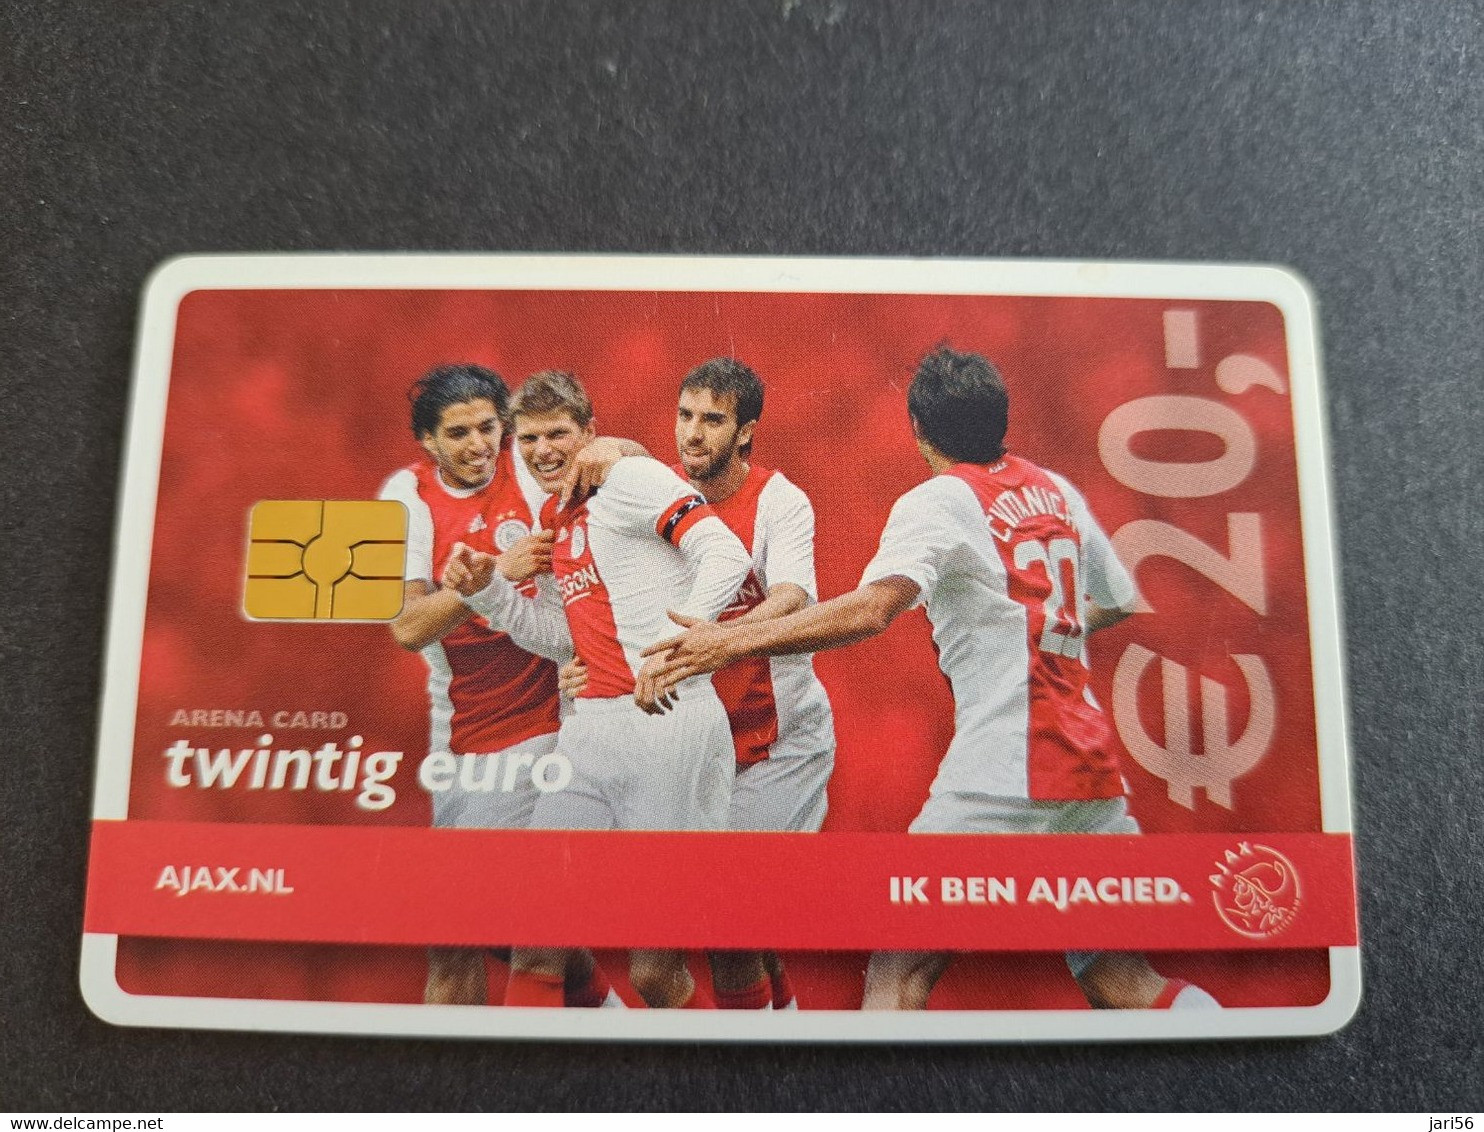 NETHERLANDS  ARENA CARD FOOTBAL/SOCCER  AJAX AMSTERDAM  HUNTELAAR/SUAREZ   €20,- USED CARD  ** 10371** - Publiques